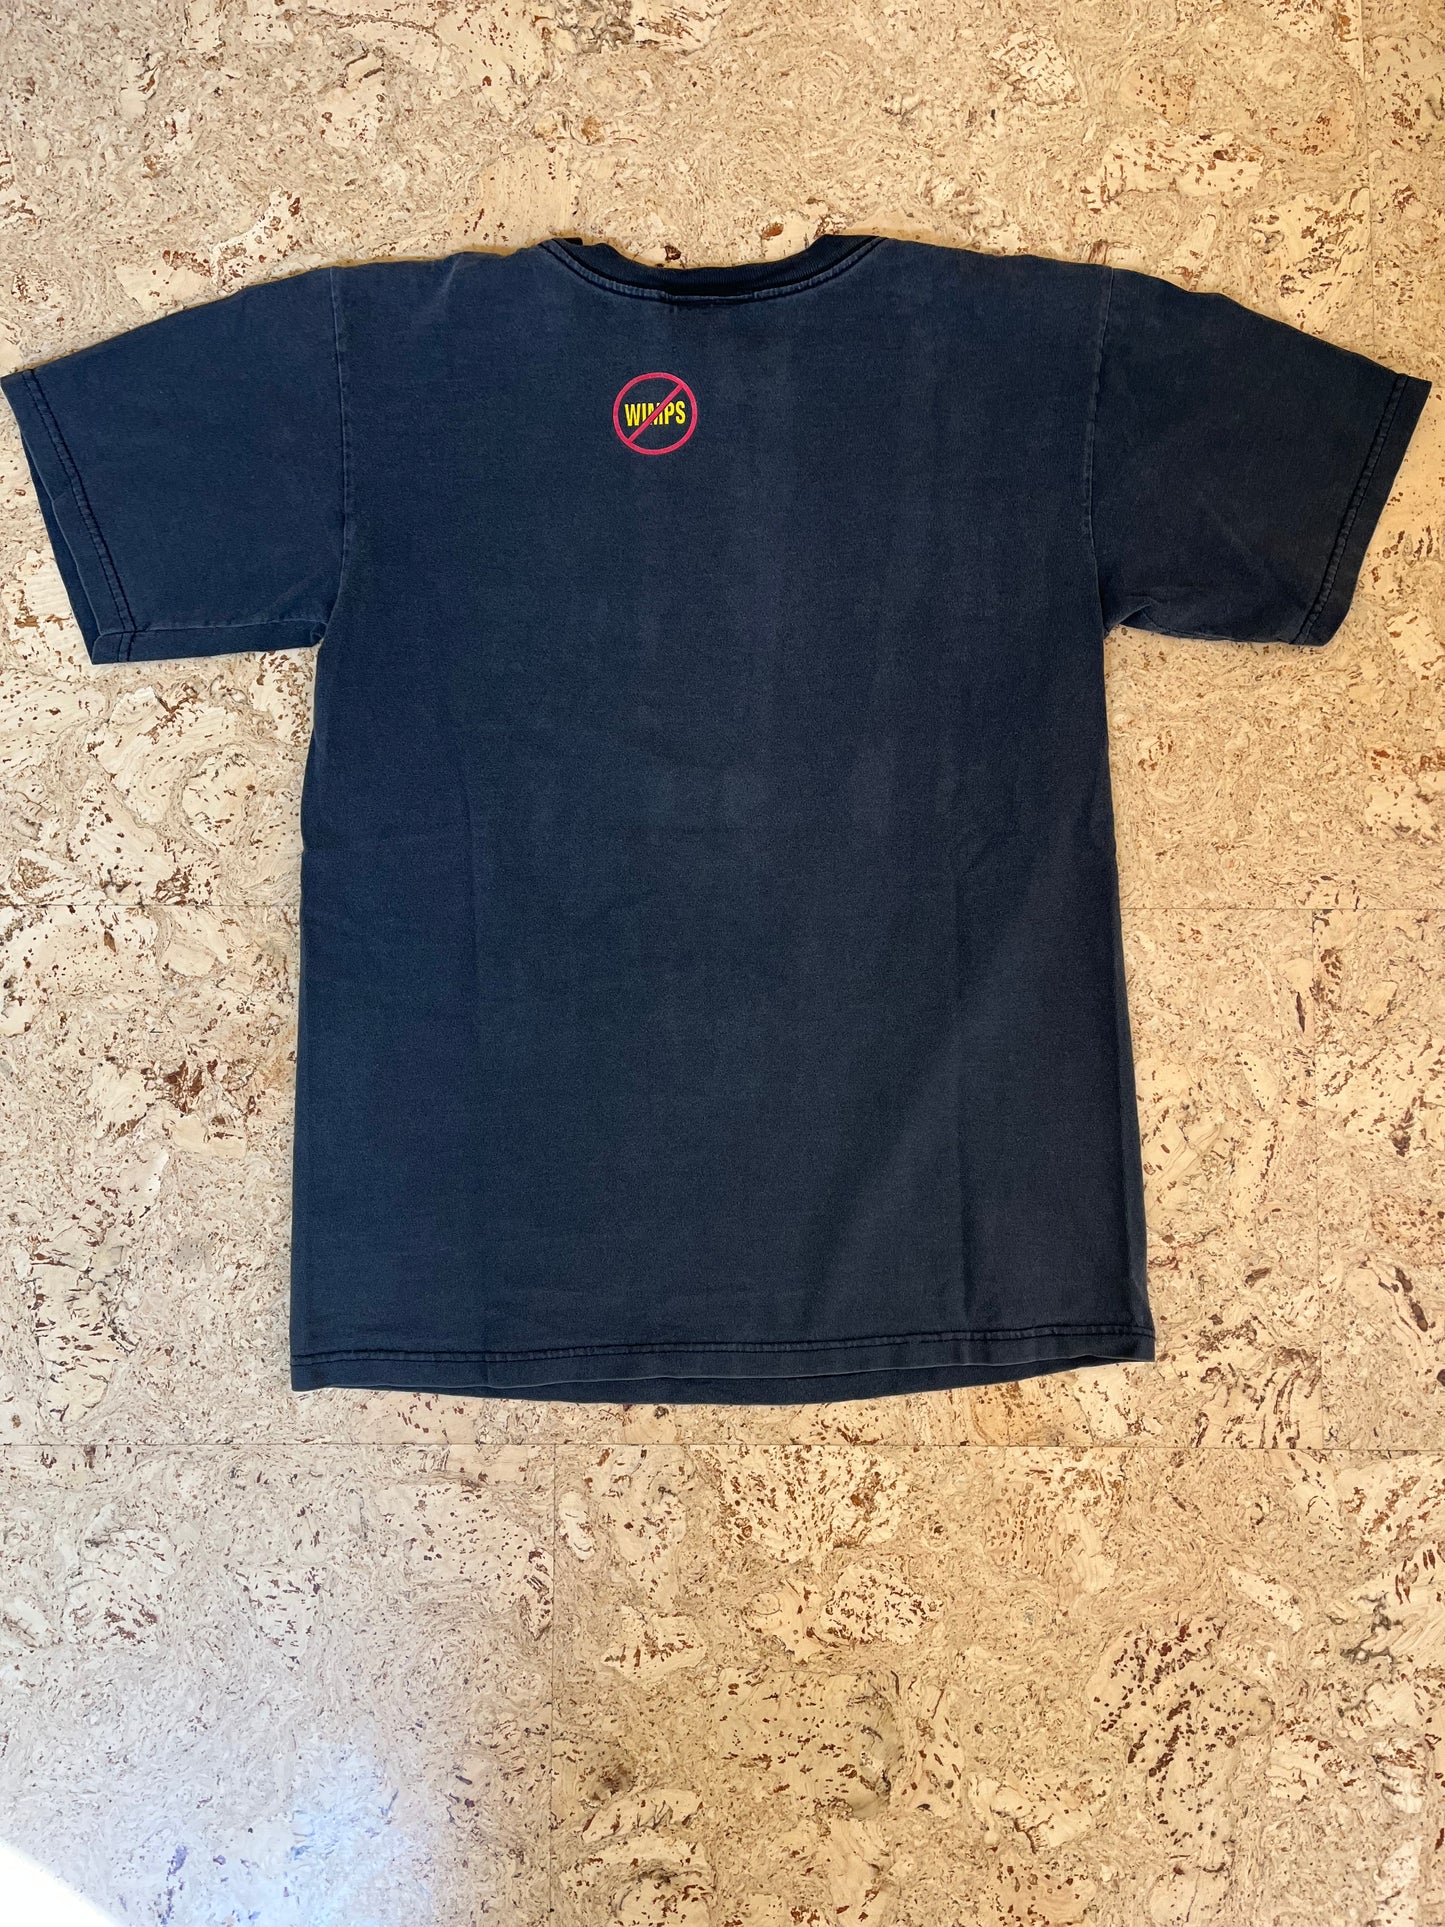 1997 Universal Studios Jaws Faded T-Shirt